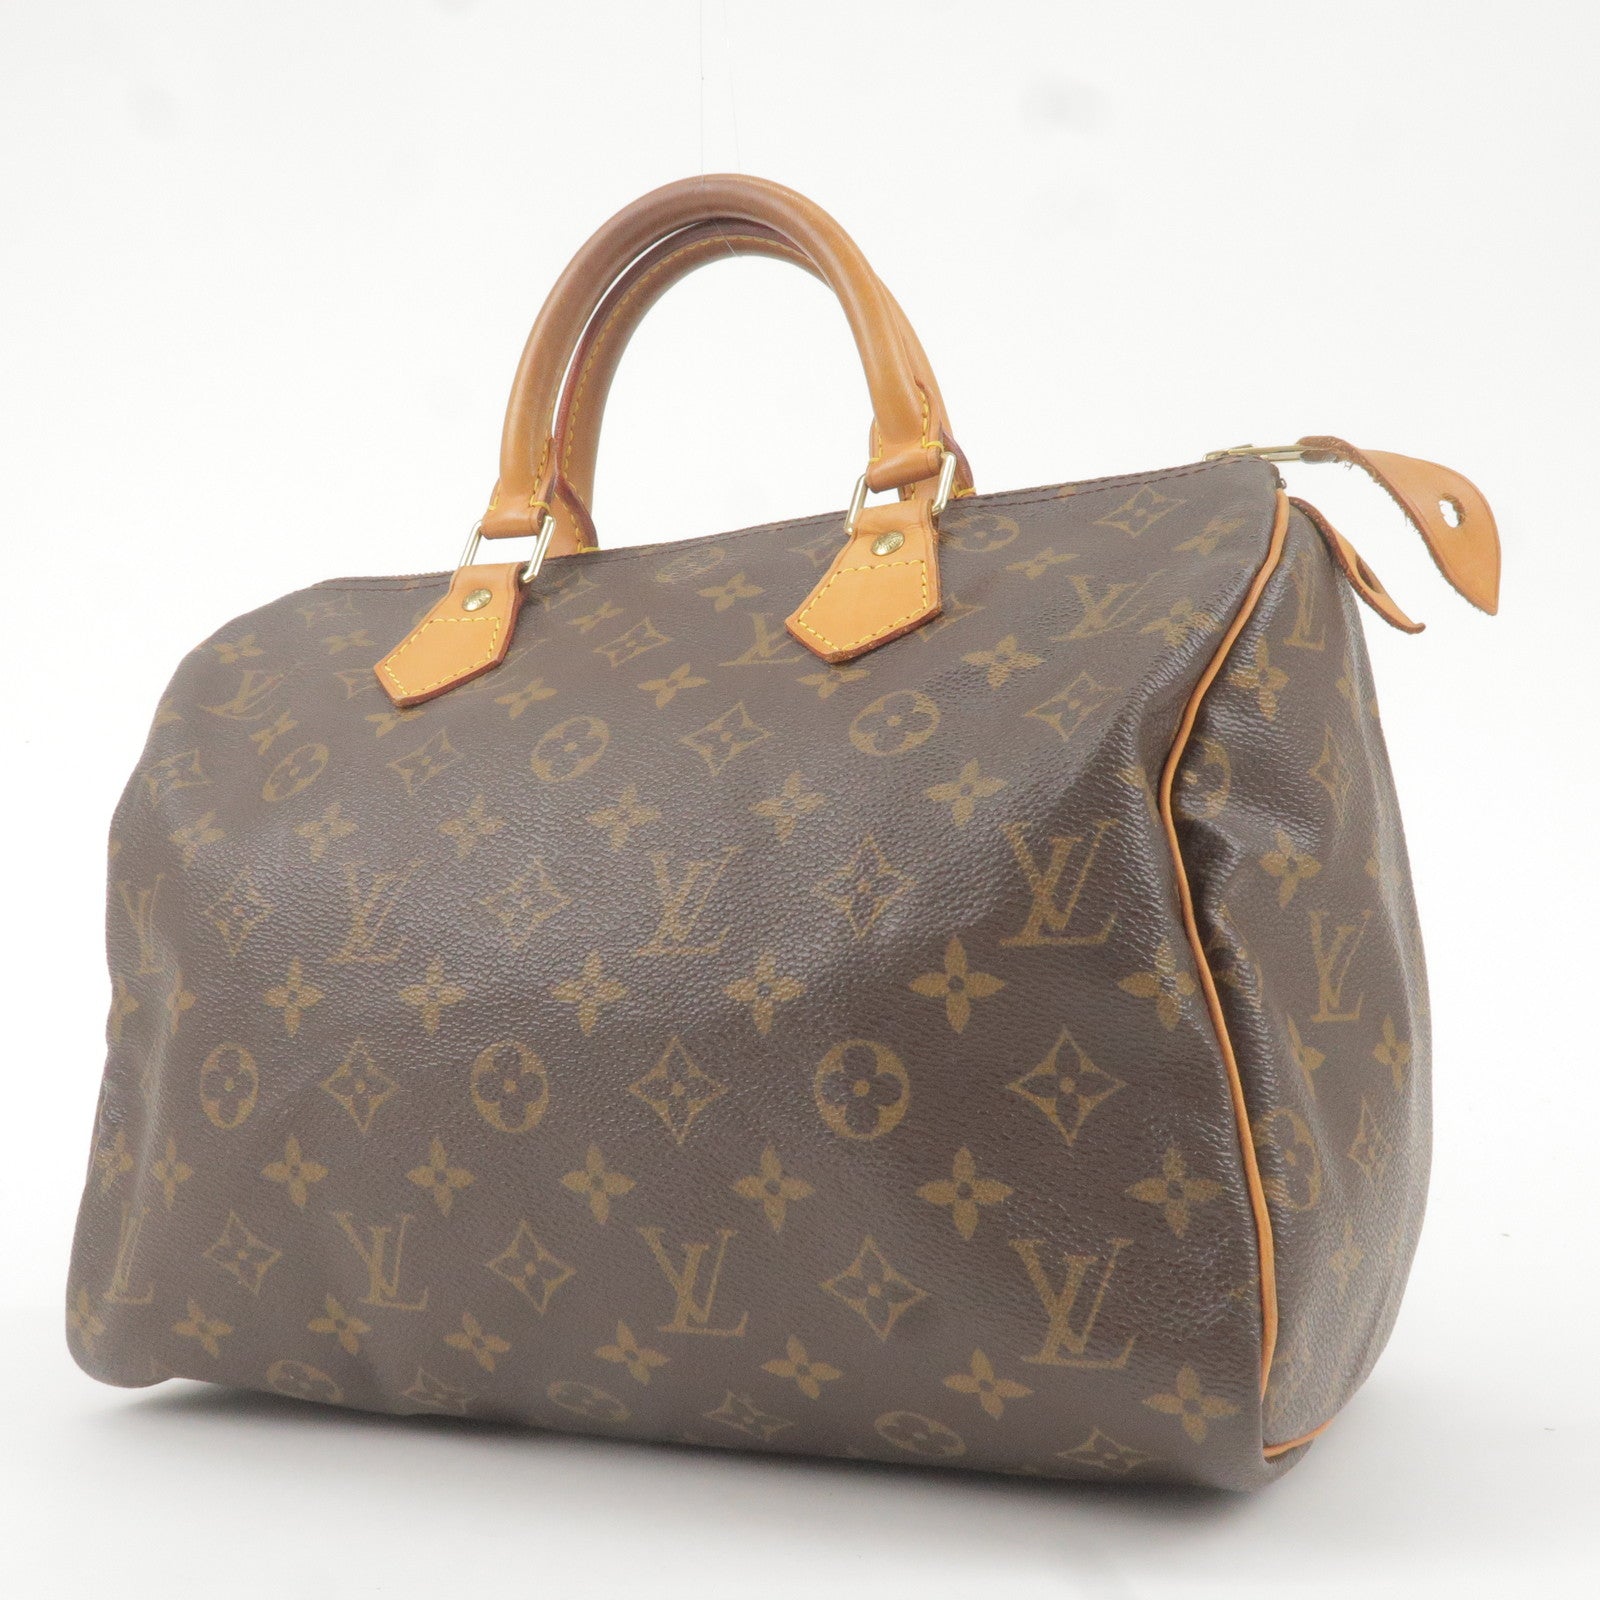 Louis Vuitton sac de voyage